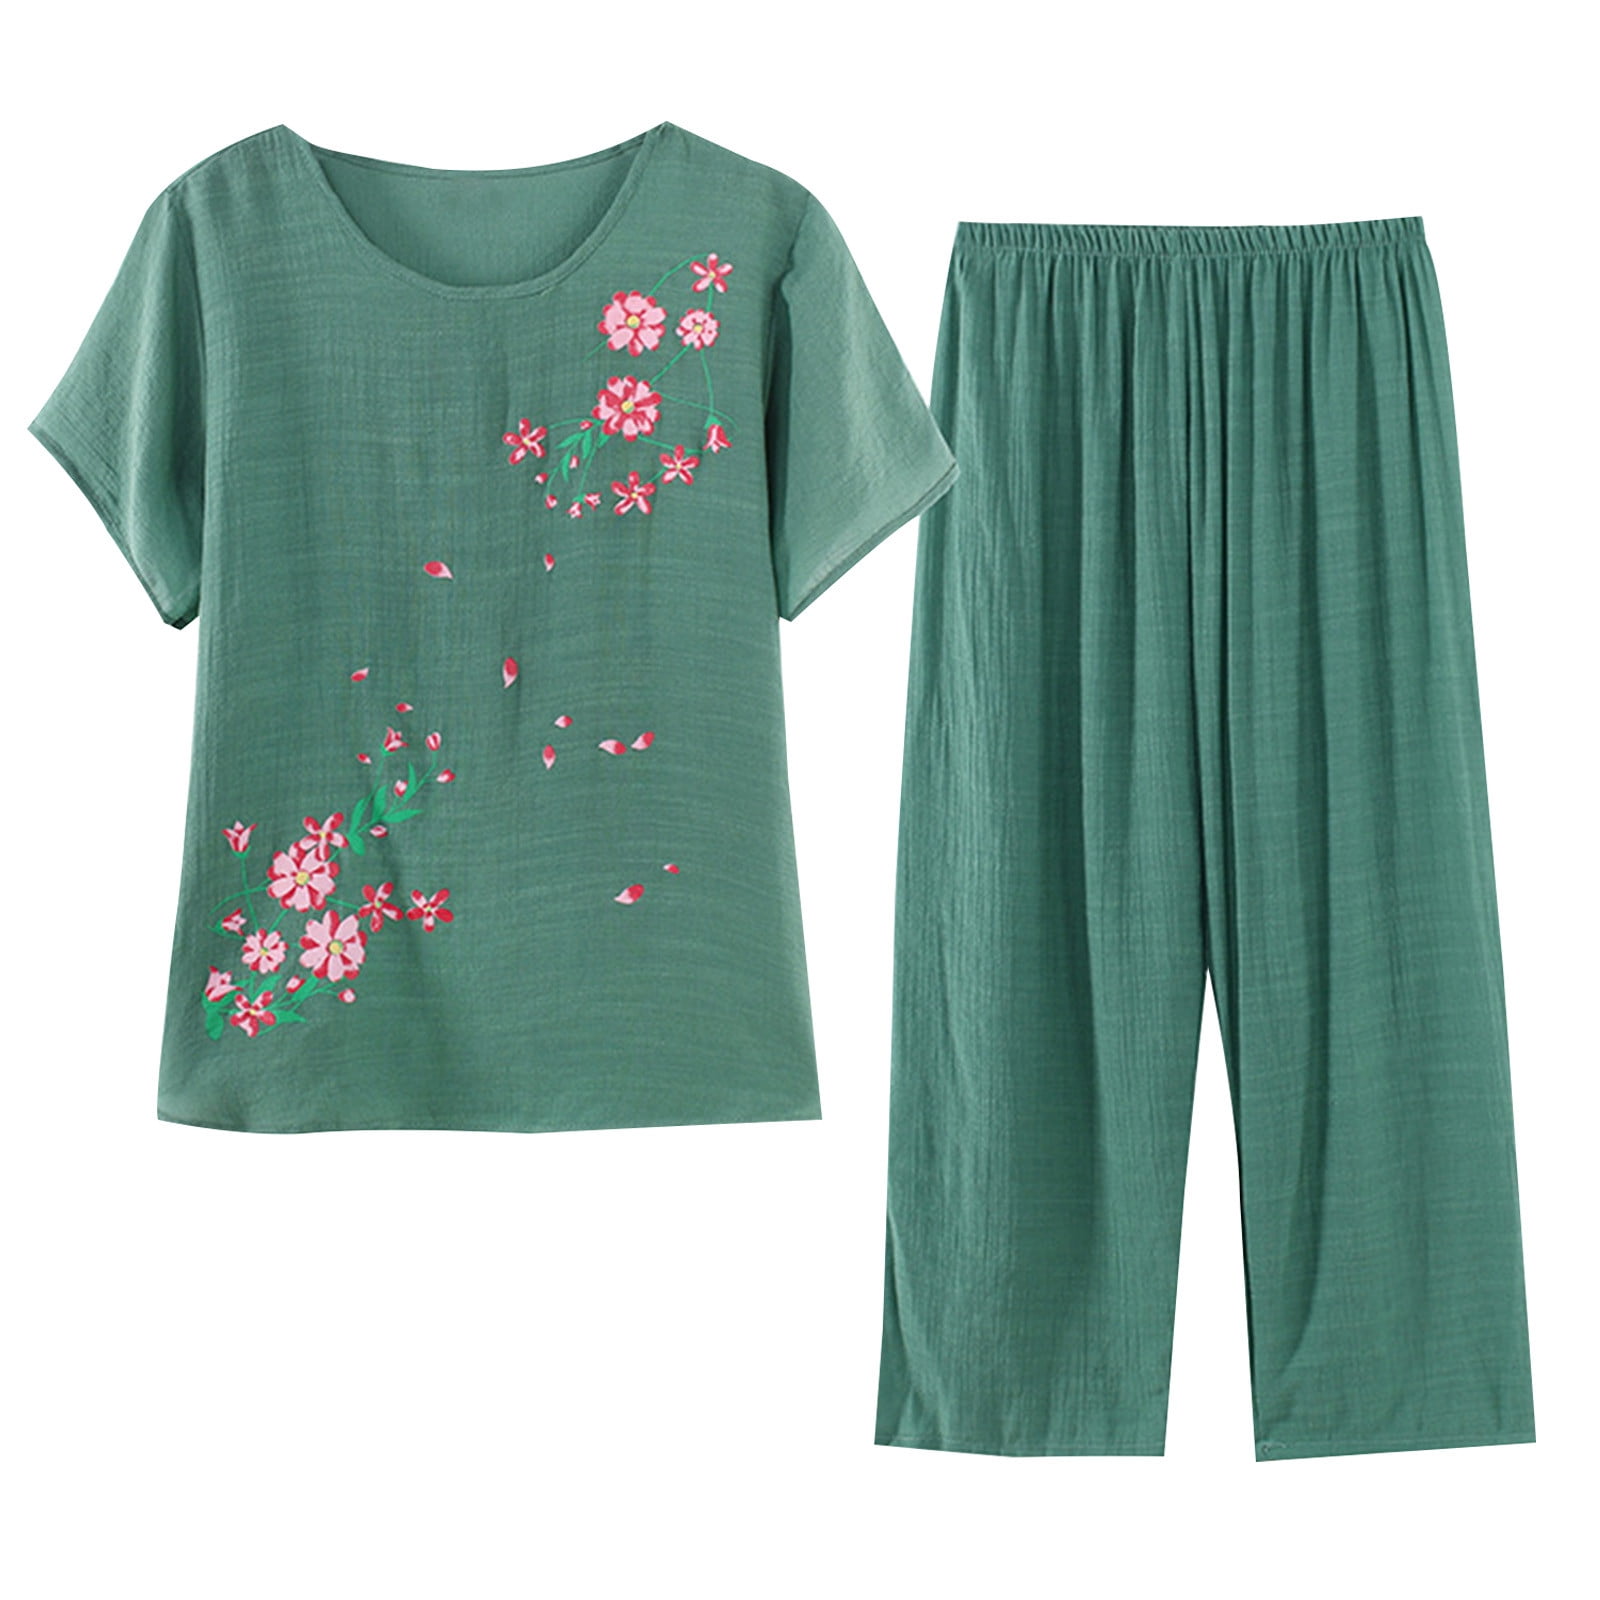 Lovskoo Women's Plus Size Summer Casual Two Piece Suit Pajamas Short ...